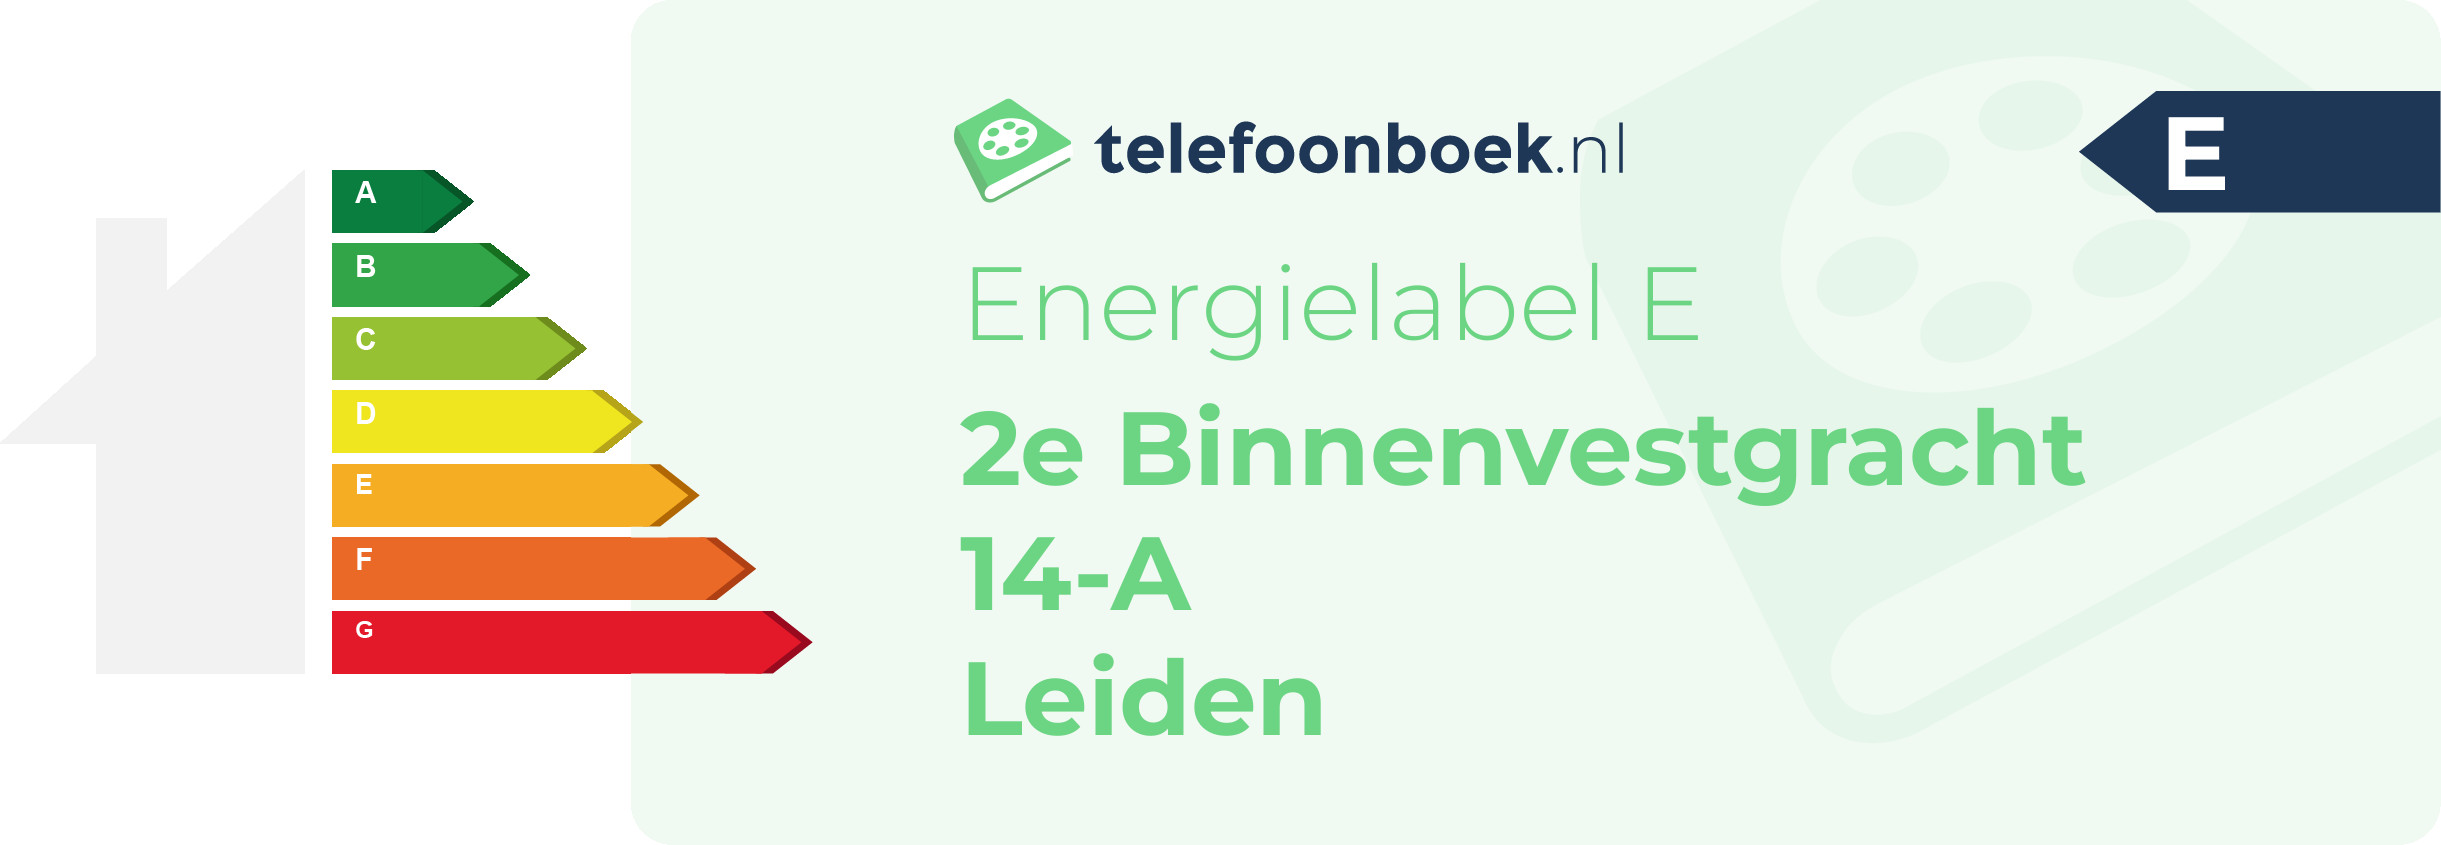 Energielabel 2e Binnenvestgracht 14-A Leiden